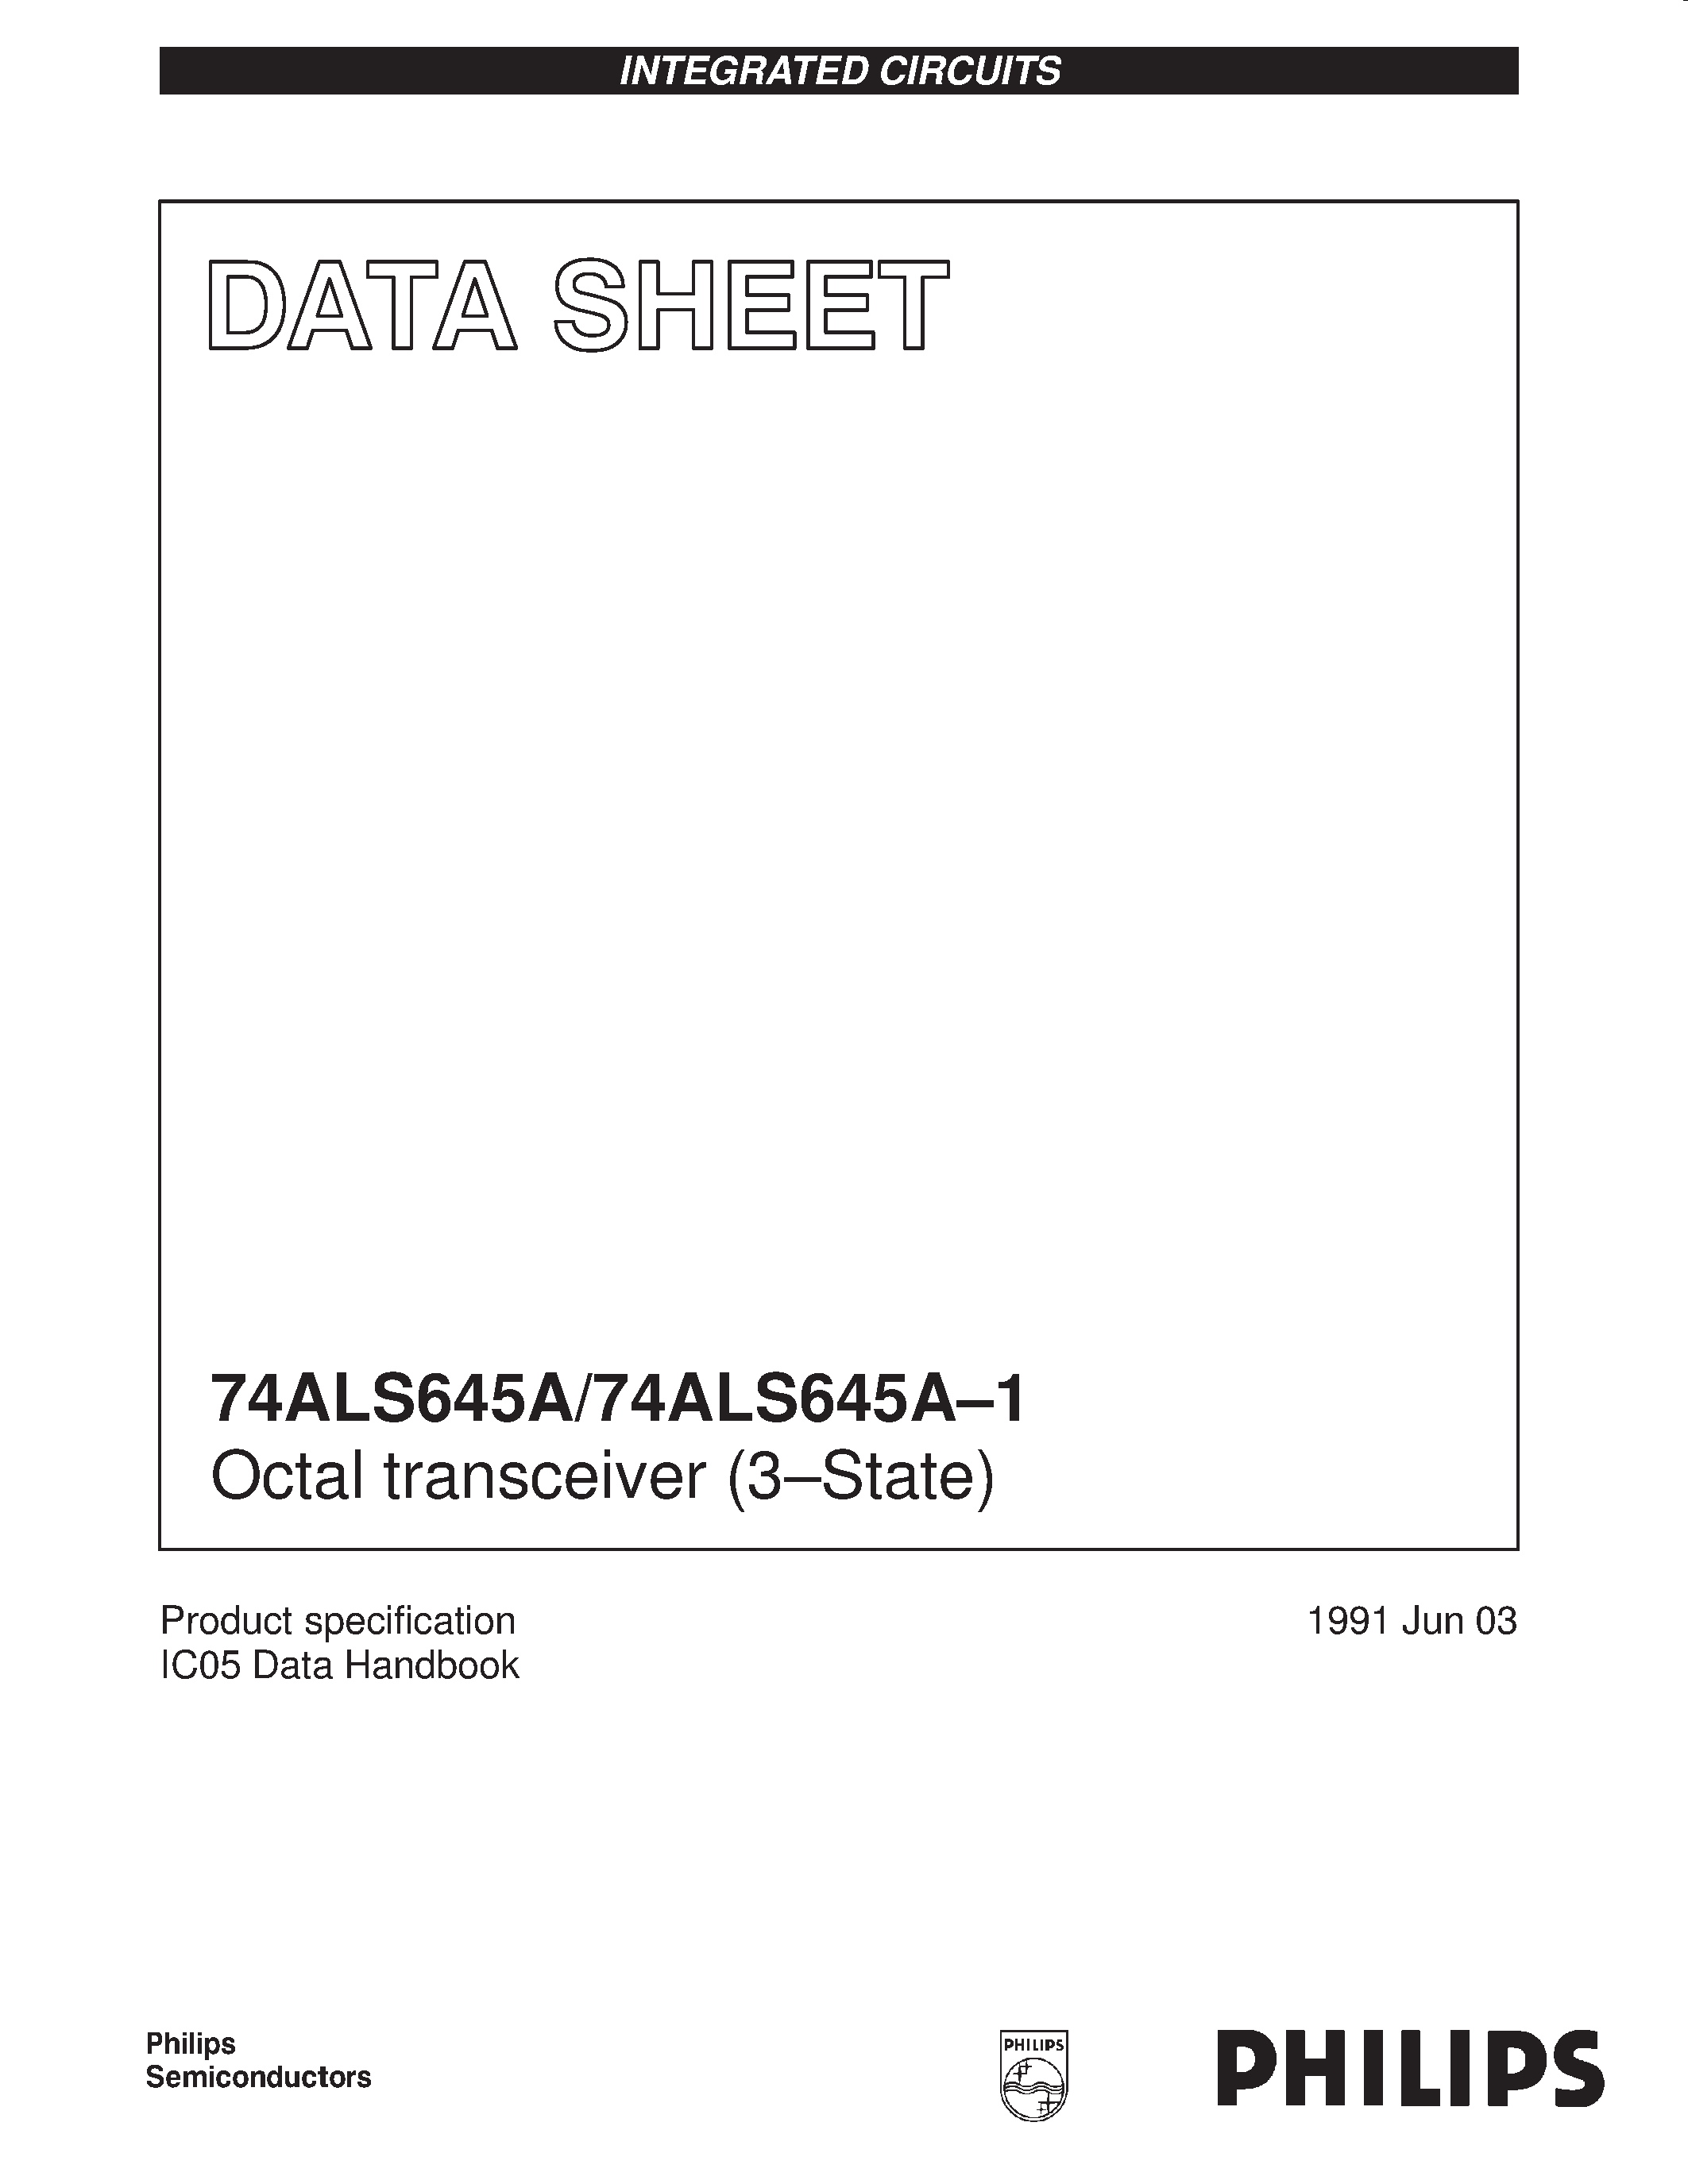 Datasheet 744ALS645A-1D - Octal transceiver 3-State page 1